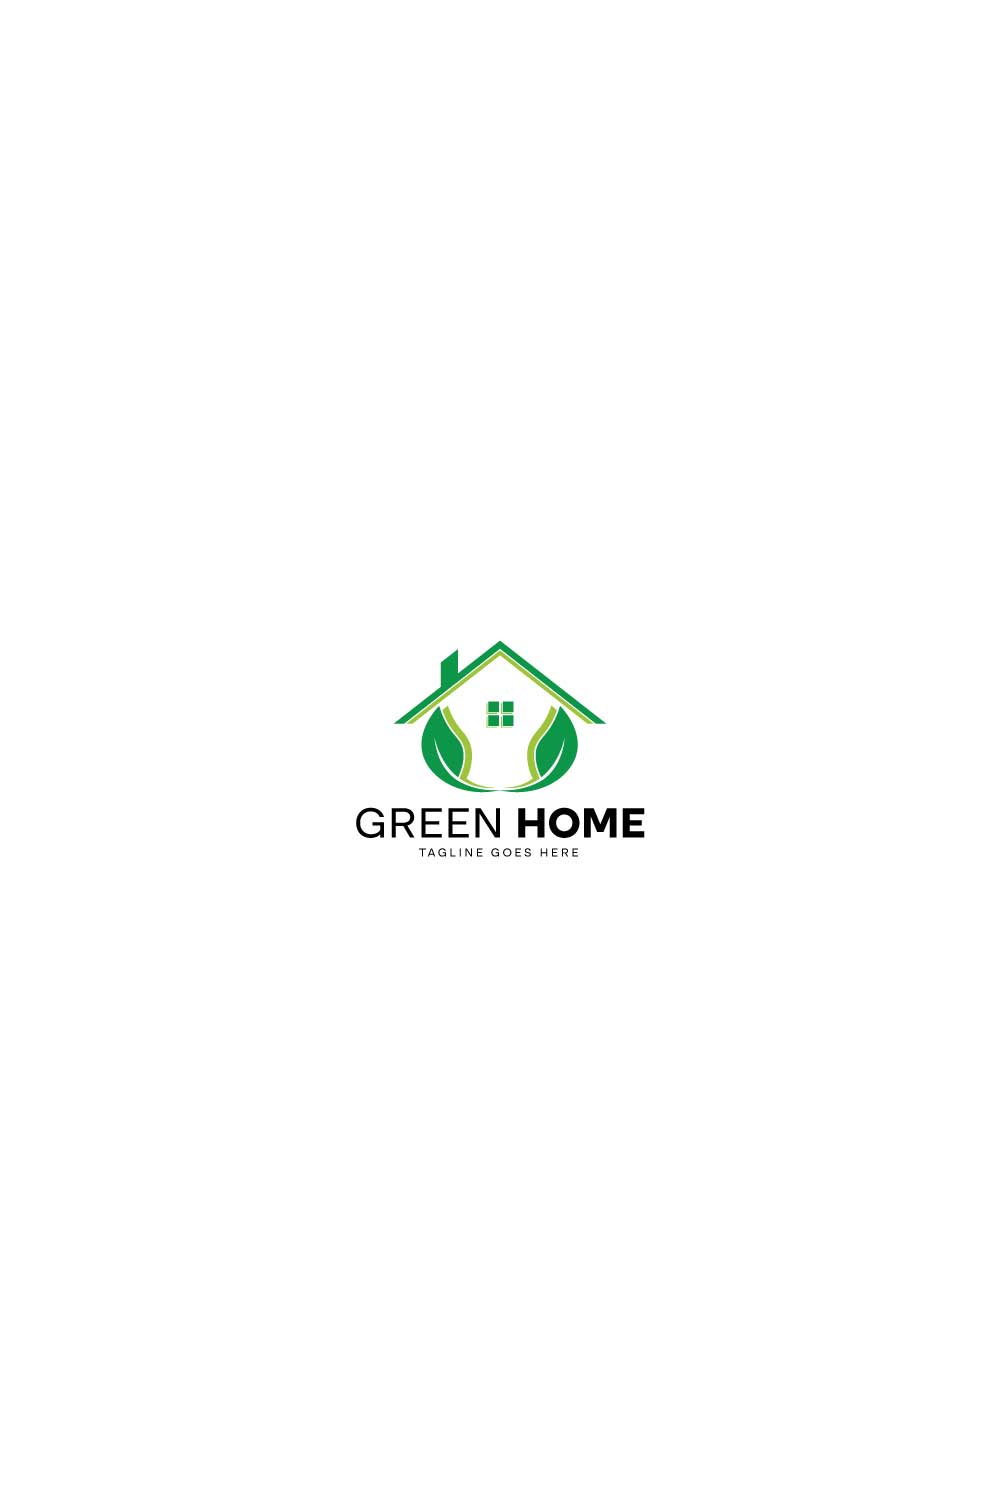 Minimalist Green Home Logo design pinterest preview image.